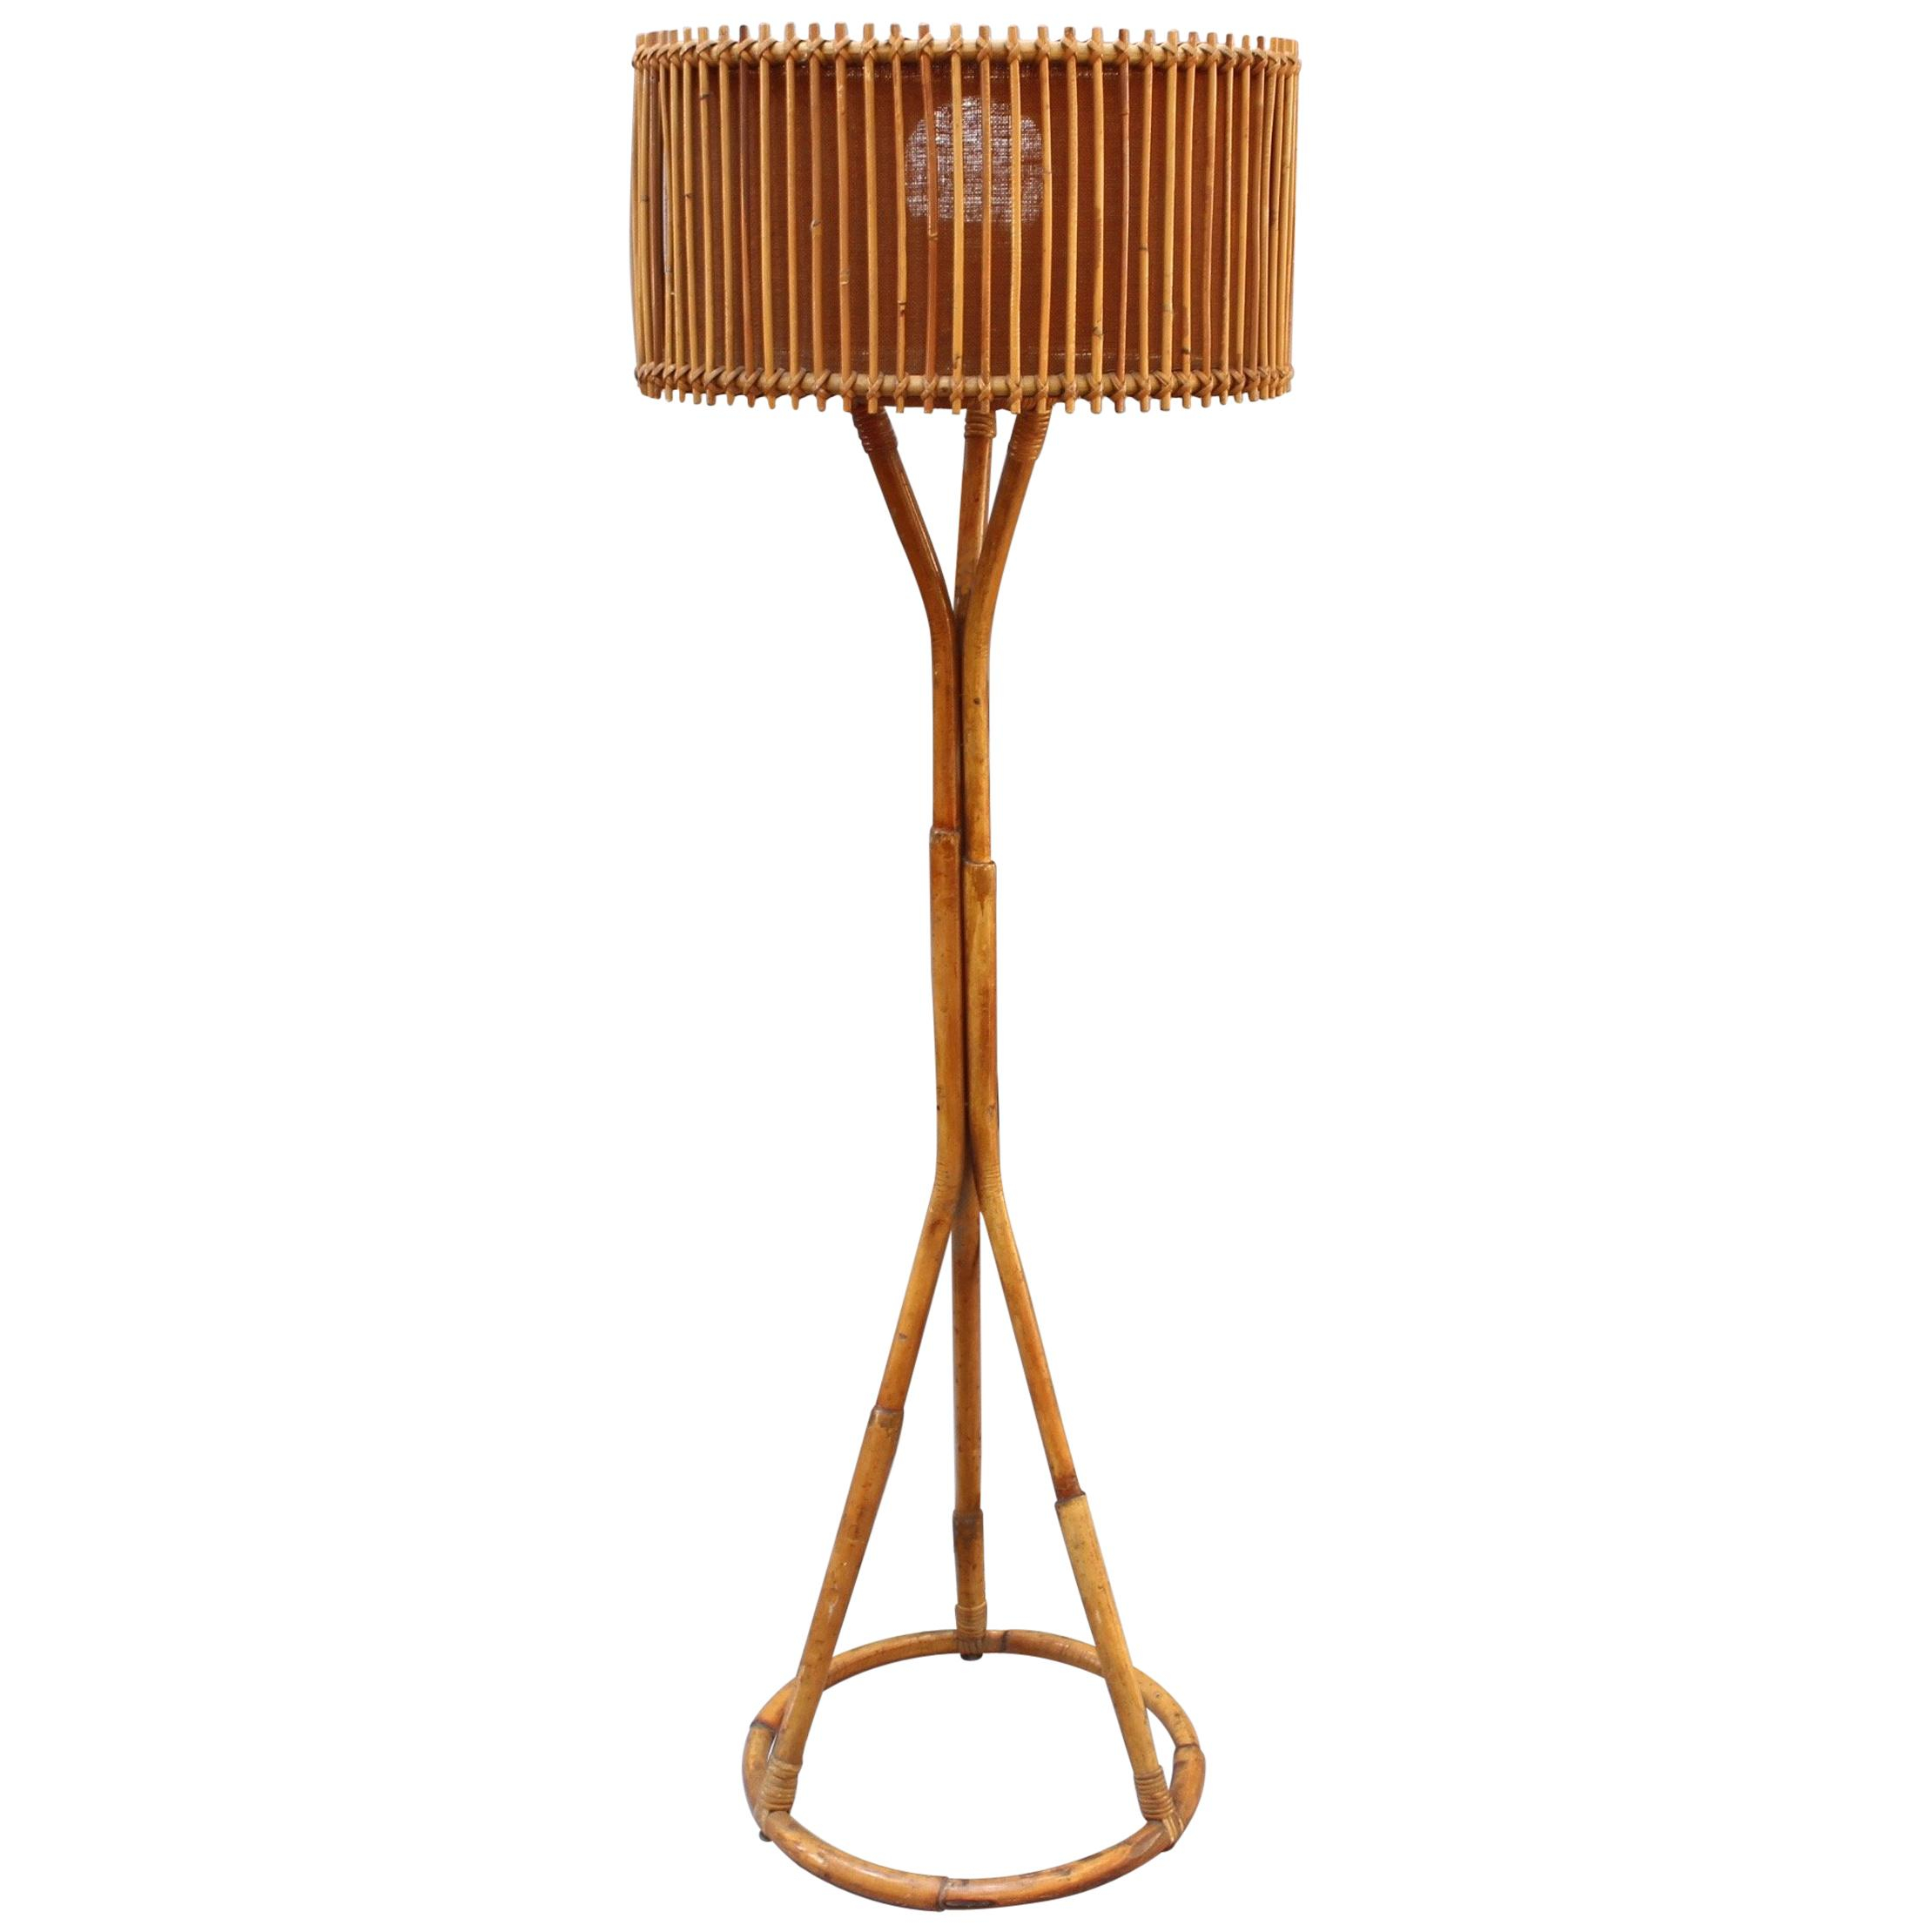 Italian Rattan And Bamboo Floor Lamp Circa 1960s Bei 1stdibs throughout measurements 2219 X 2219